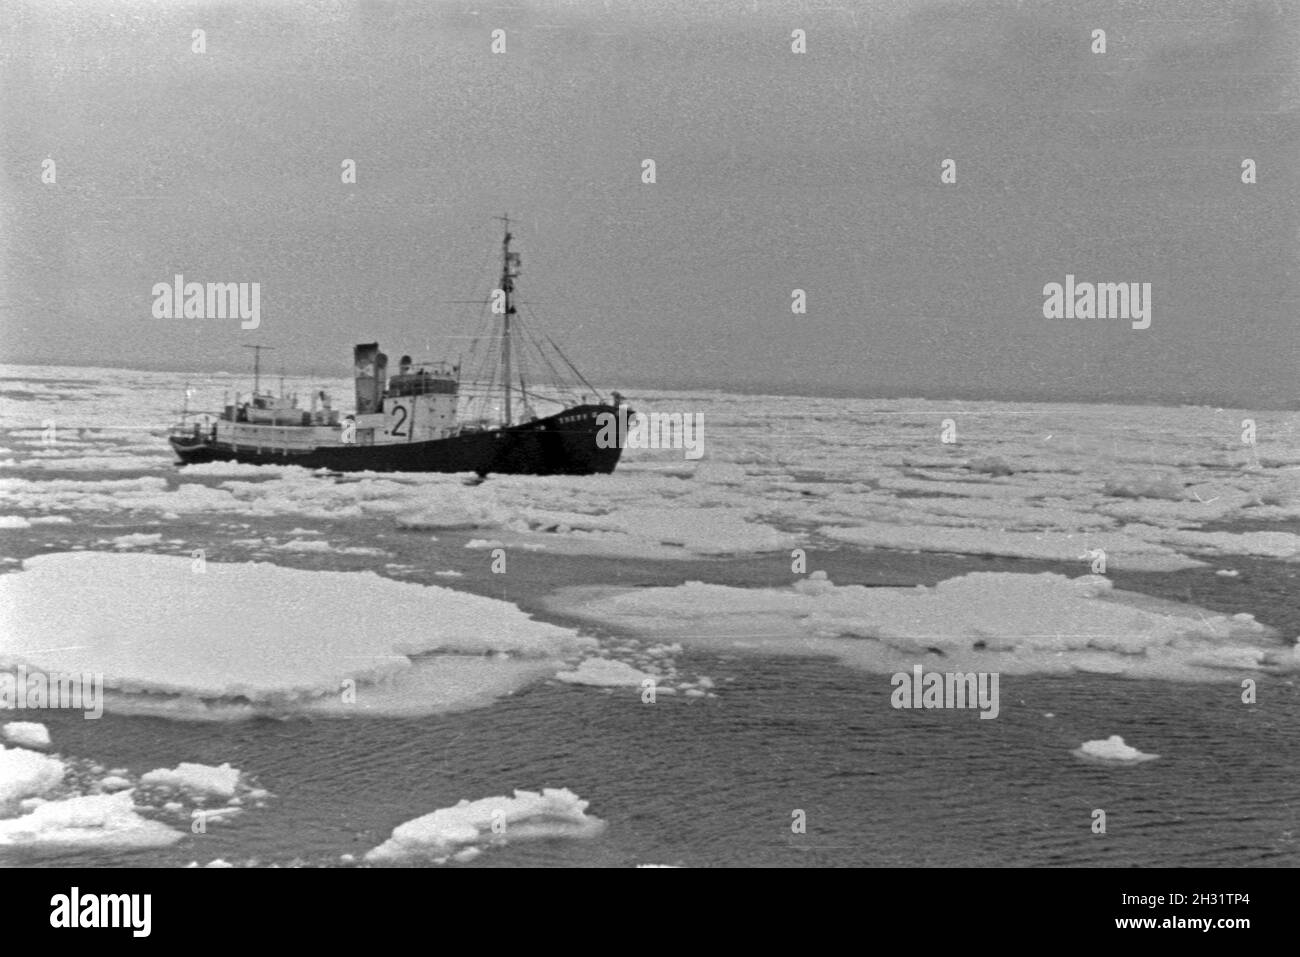 Fangboot 'Treff II' der deutschen Walfangflotte im Eismeer der Antarktis, 1930er Jahre. Whaling boat 'Treff II' of the German whaling fleet on the Antarctic Sea, 1930s. Stock Photo